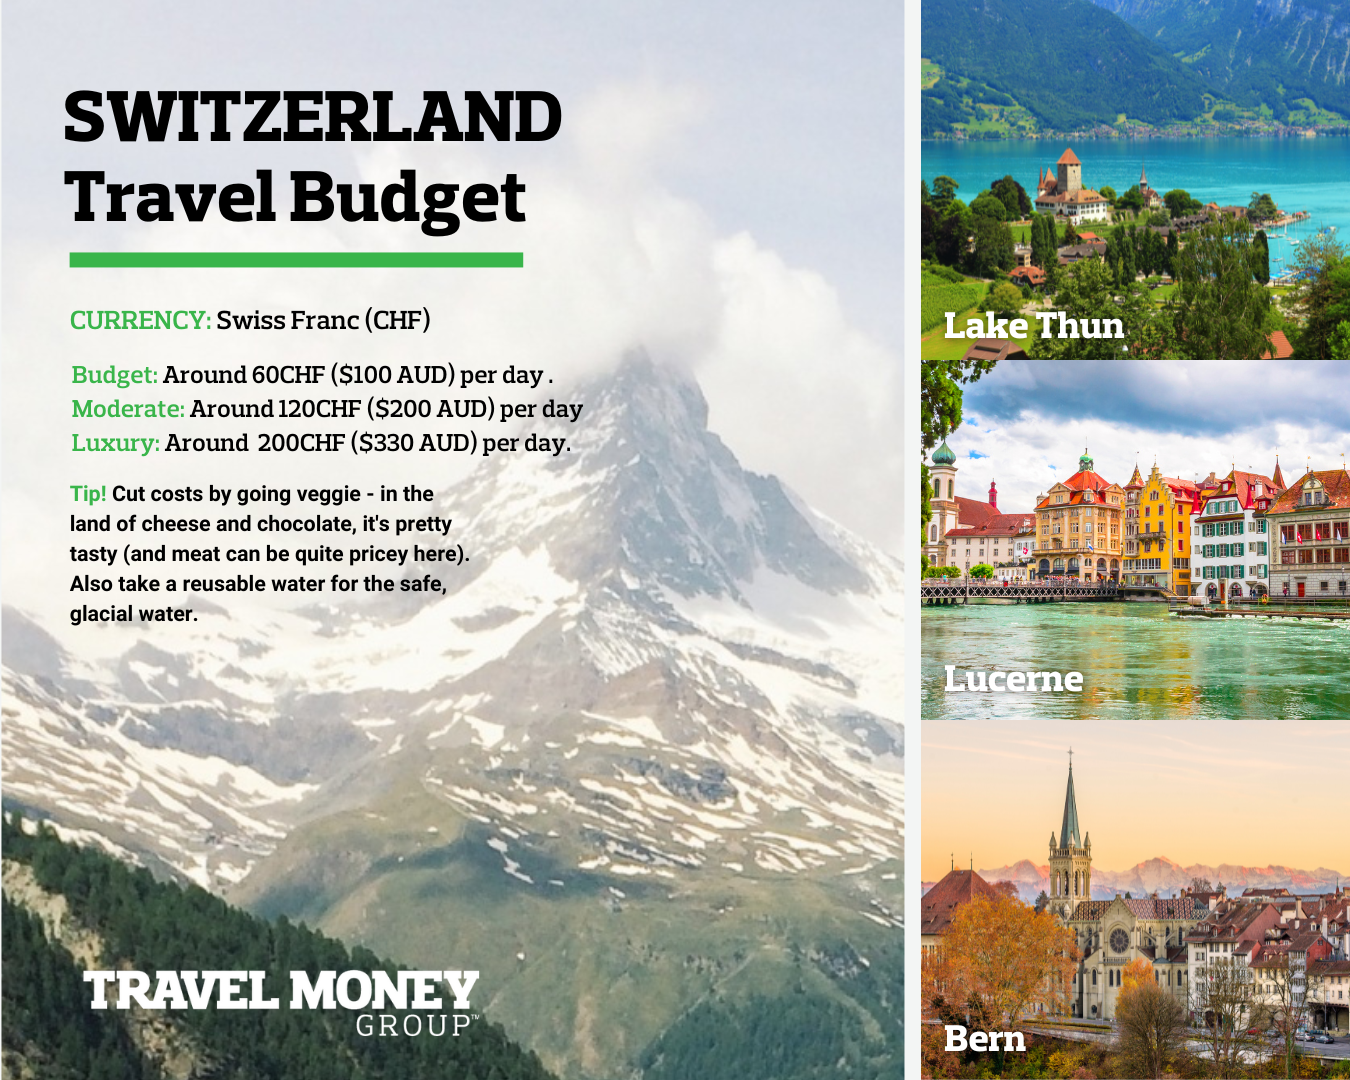 Switzerland Travel Holiday Budget Infographic featuring Lucerne, Bern, and Interlaken, and Mattehorne